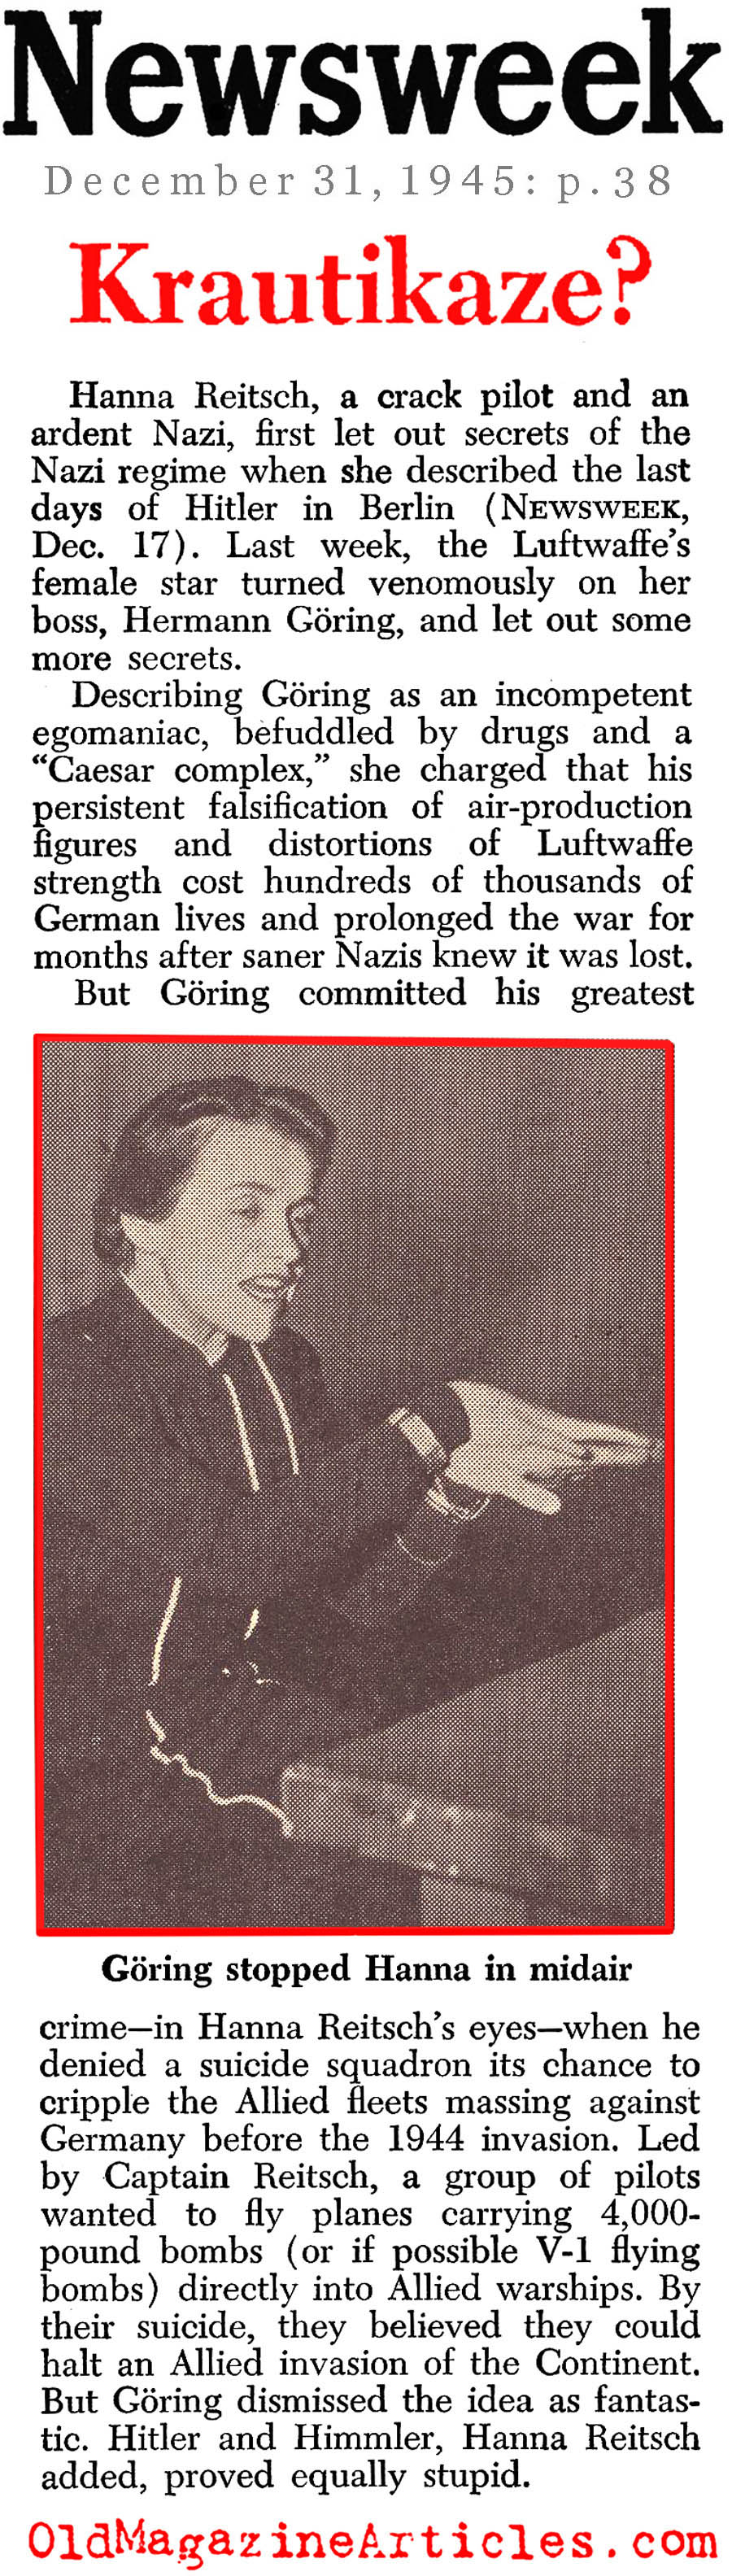 The Kamikazes That Weren't (Newsweek Magazine, 1945)